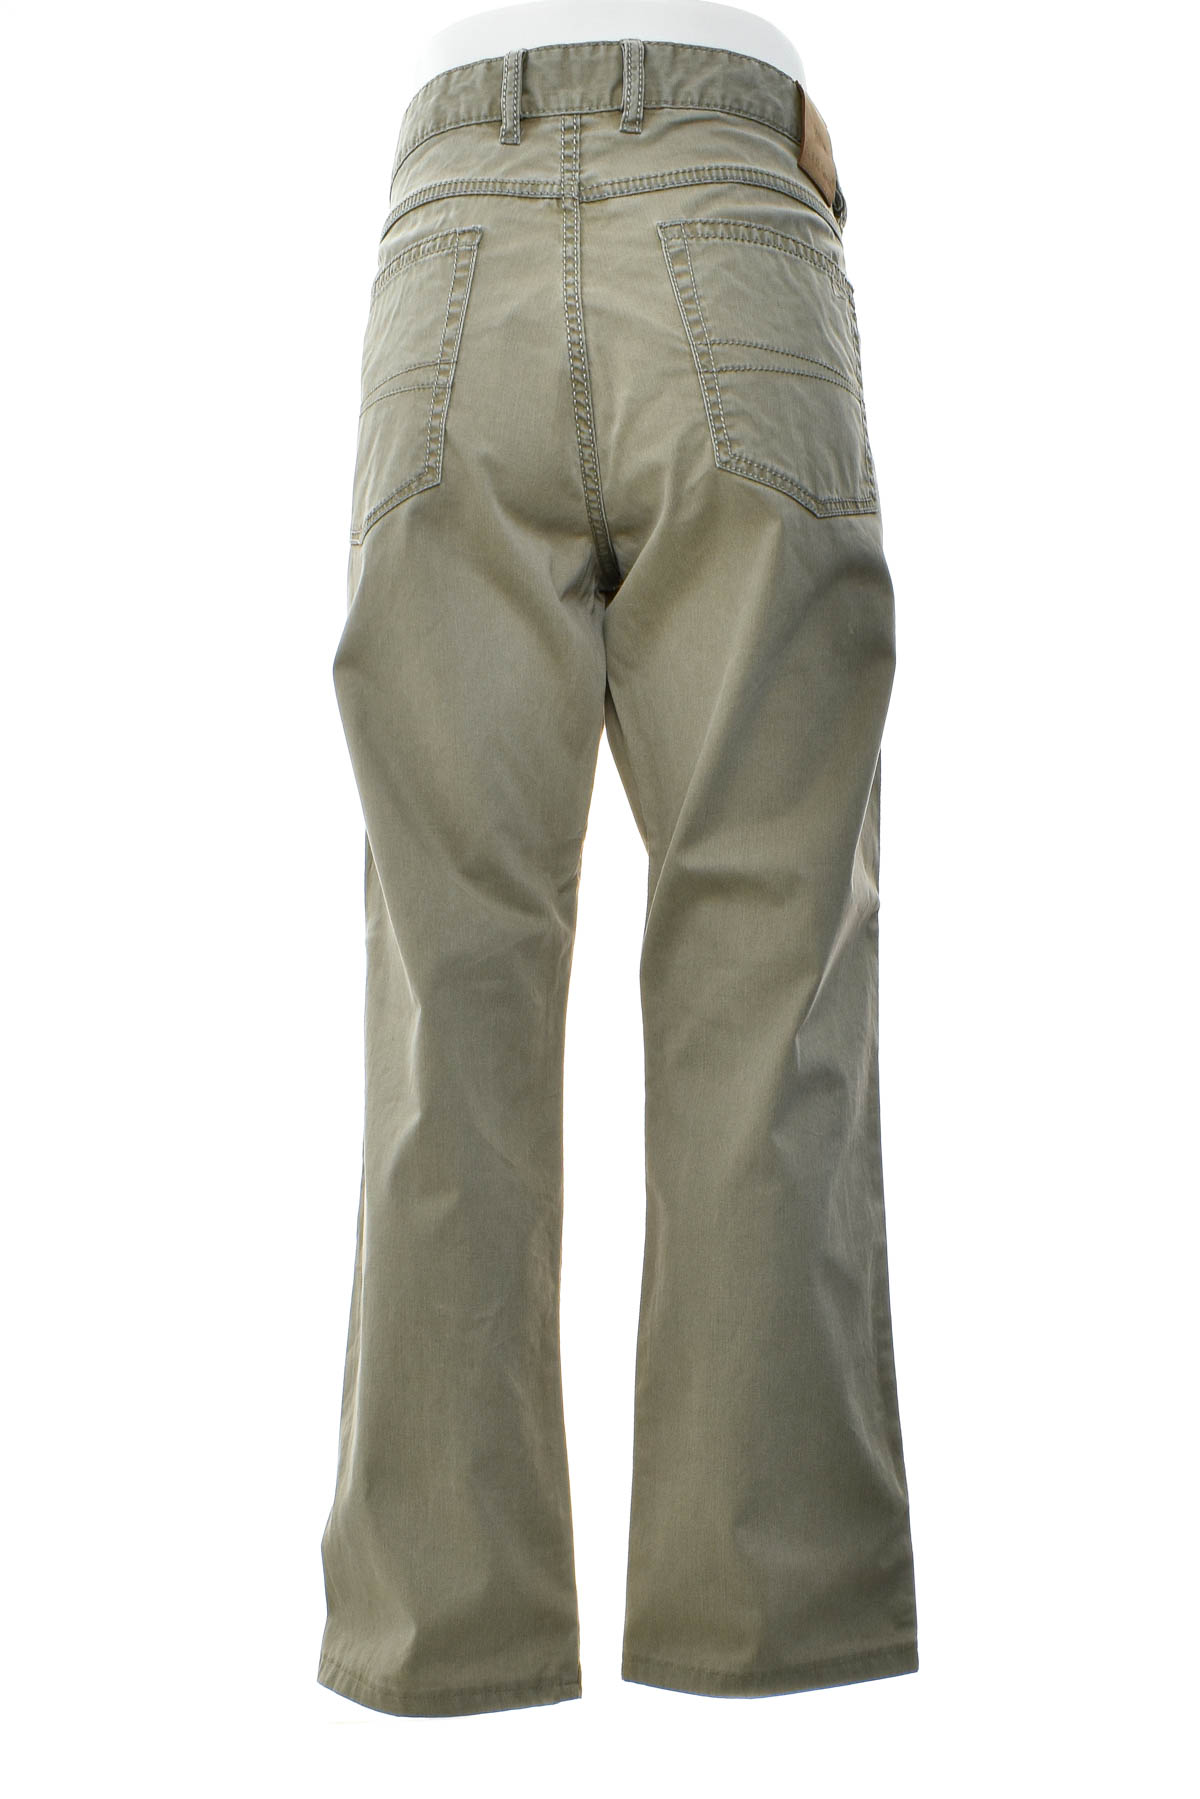 Pantalon pentru bărbați - Paul R. Smith - 1